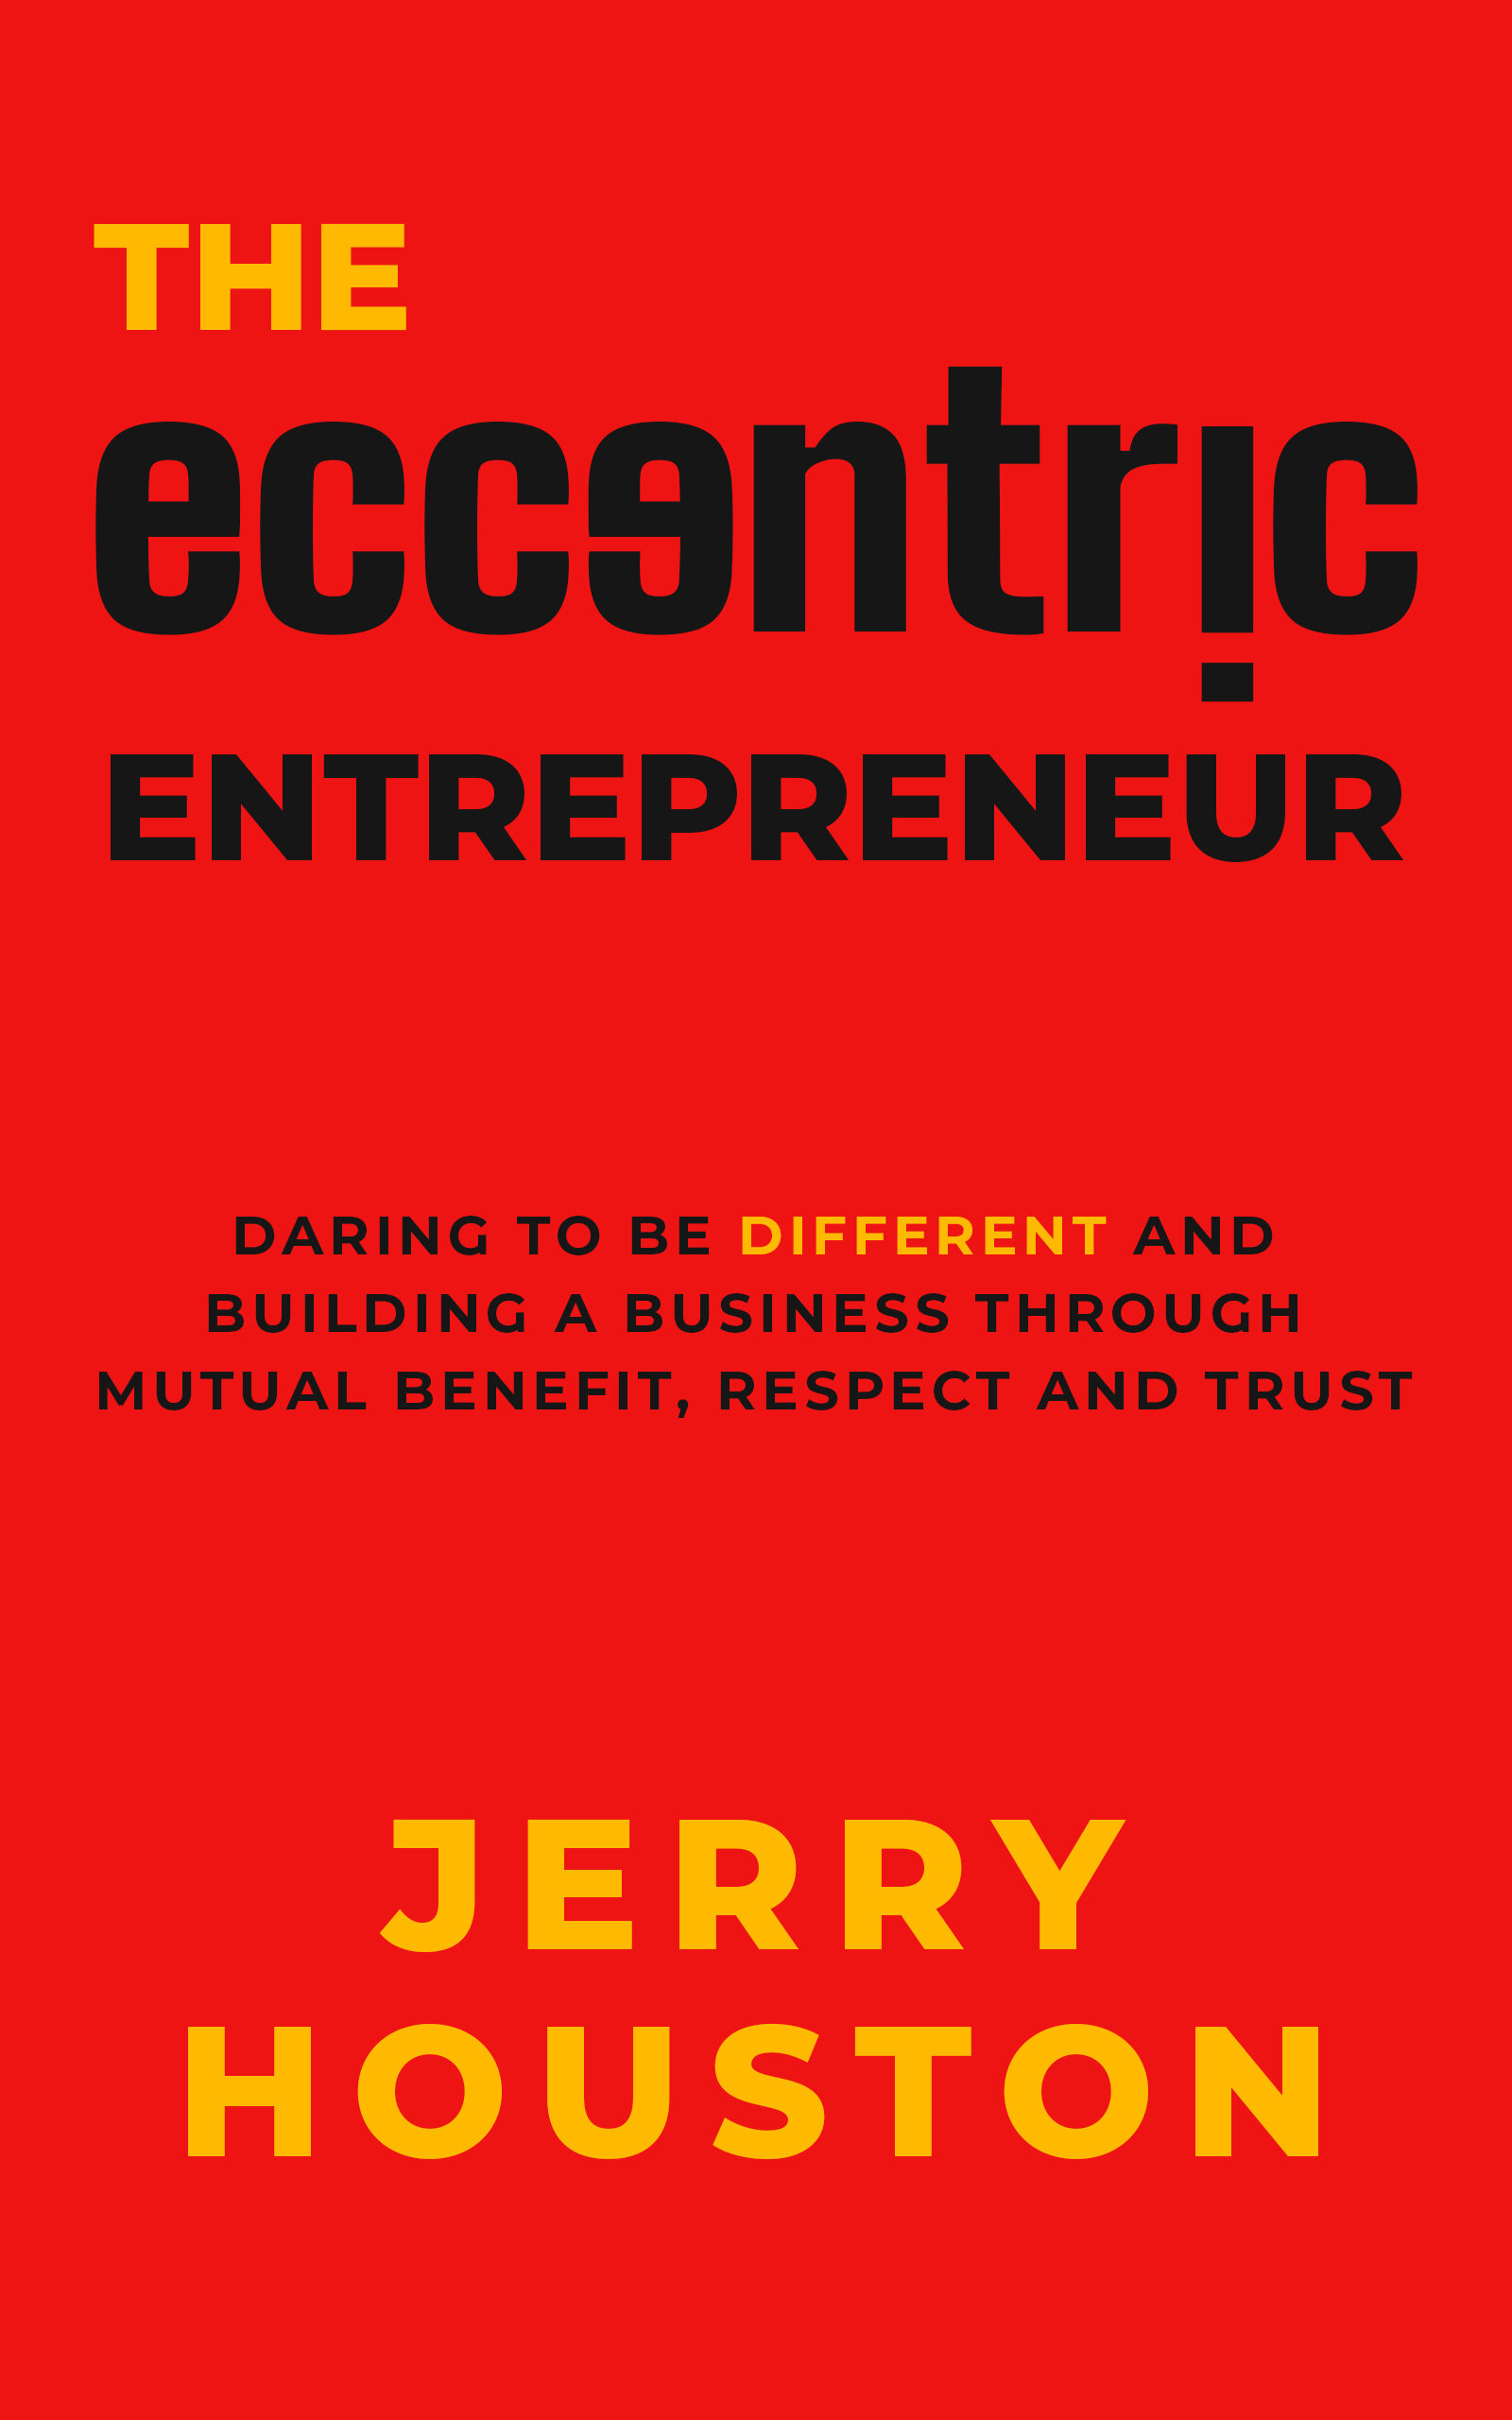 The Eccentric Entrepreneur Book Cover